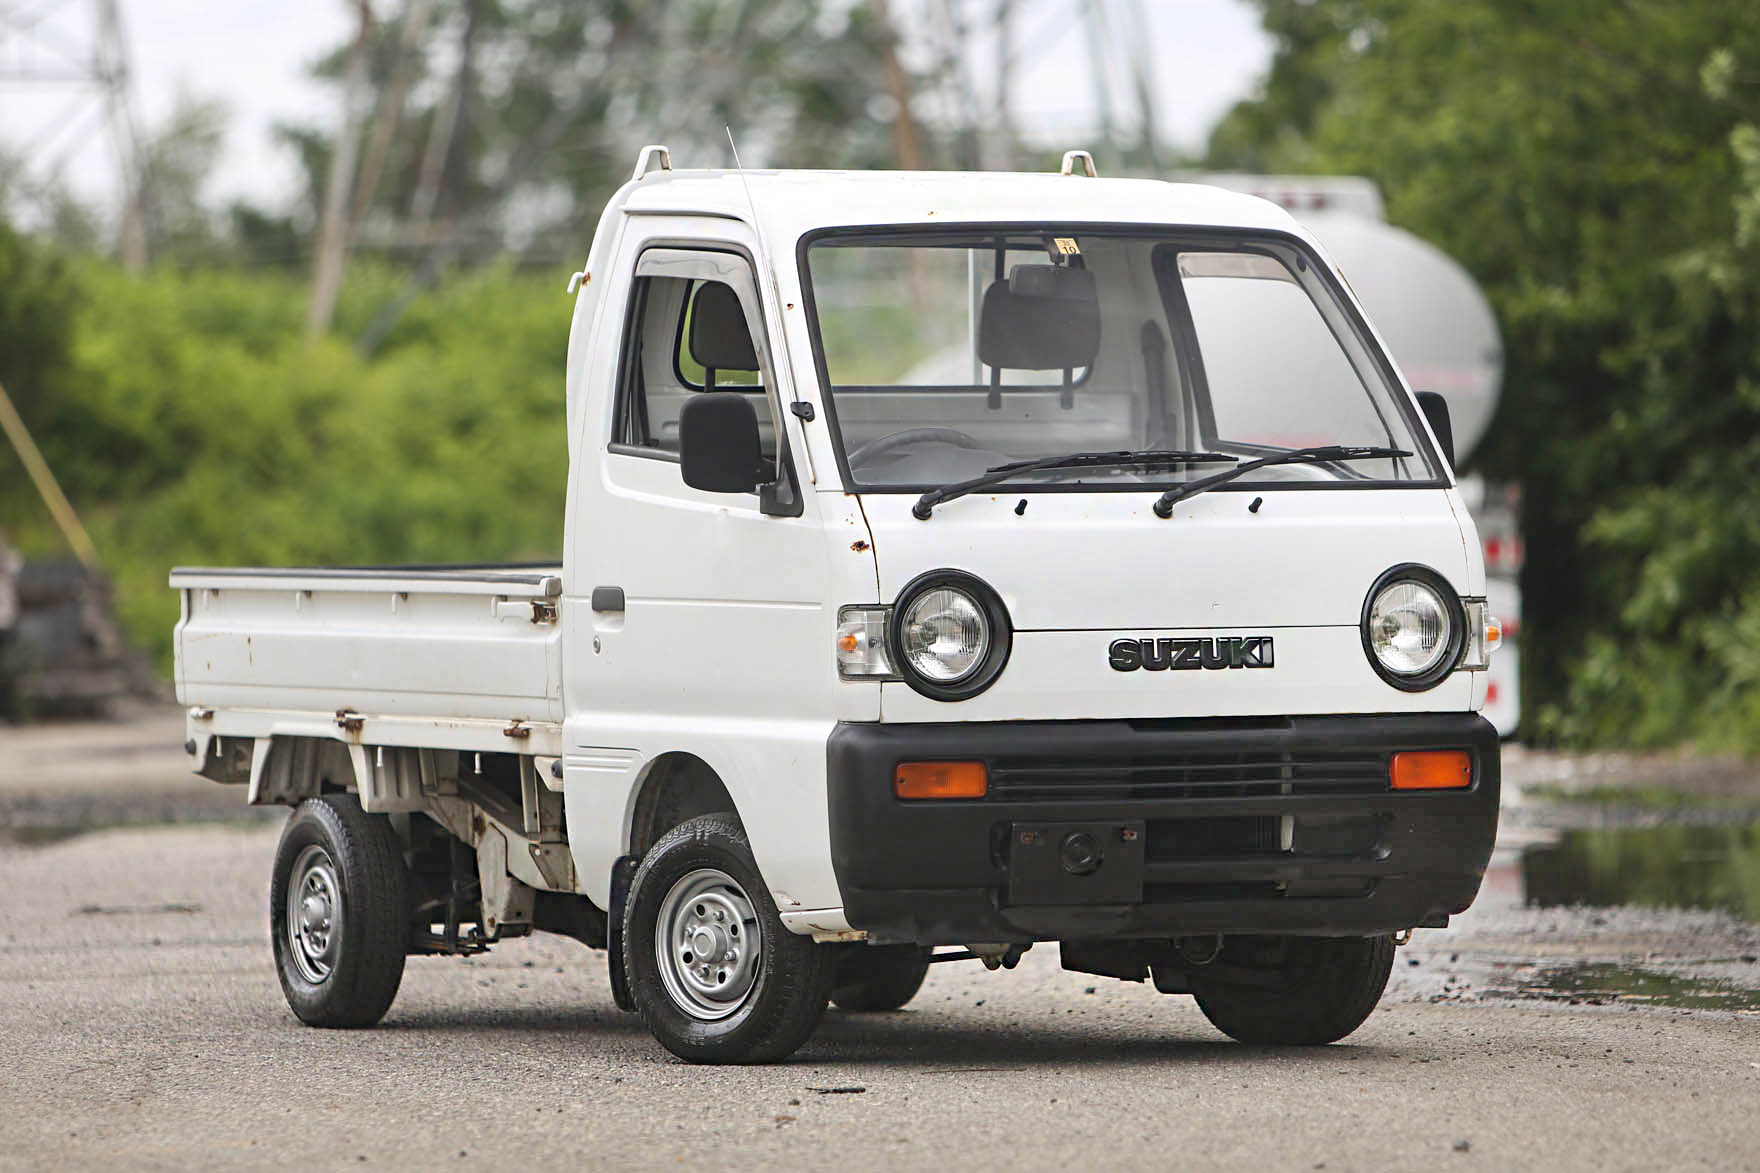 1993 Suzuki Carry 2WD - $3,750